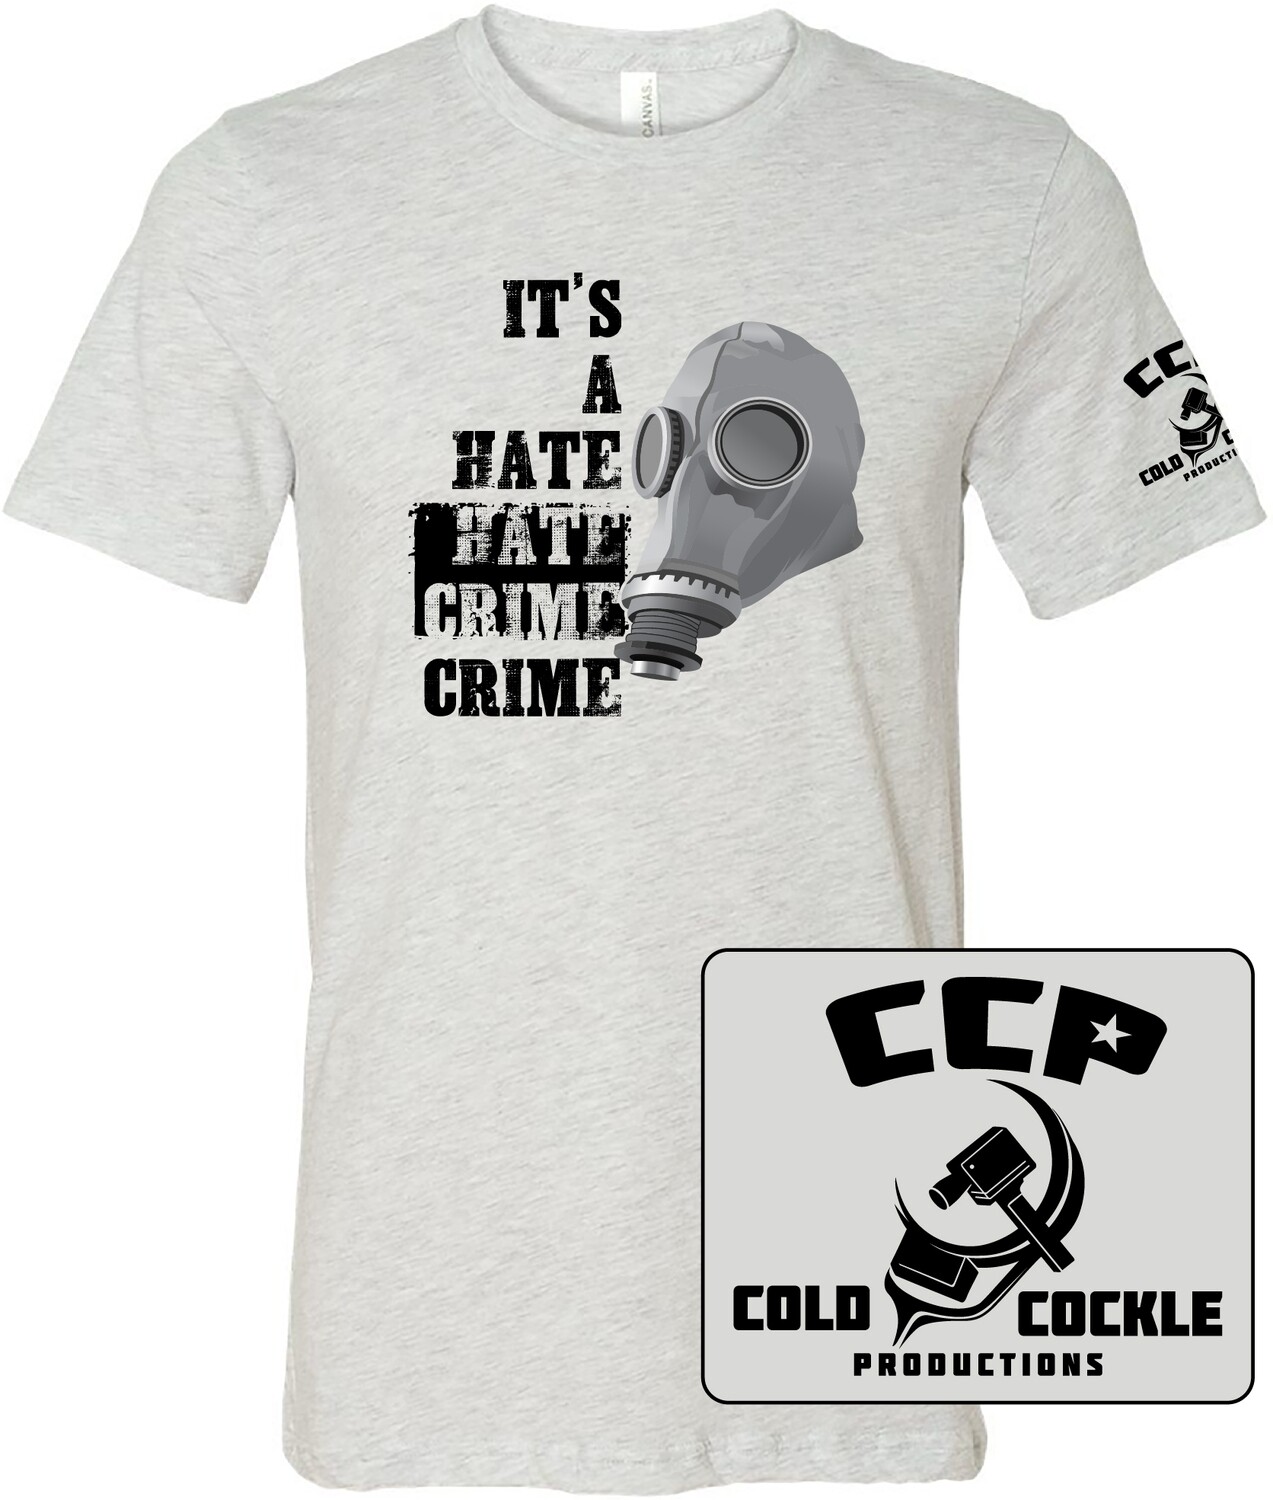 Hate Hate Crime Crime